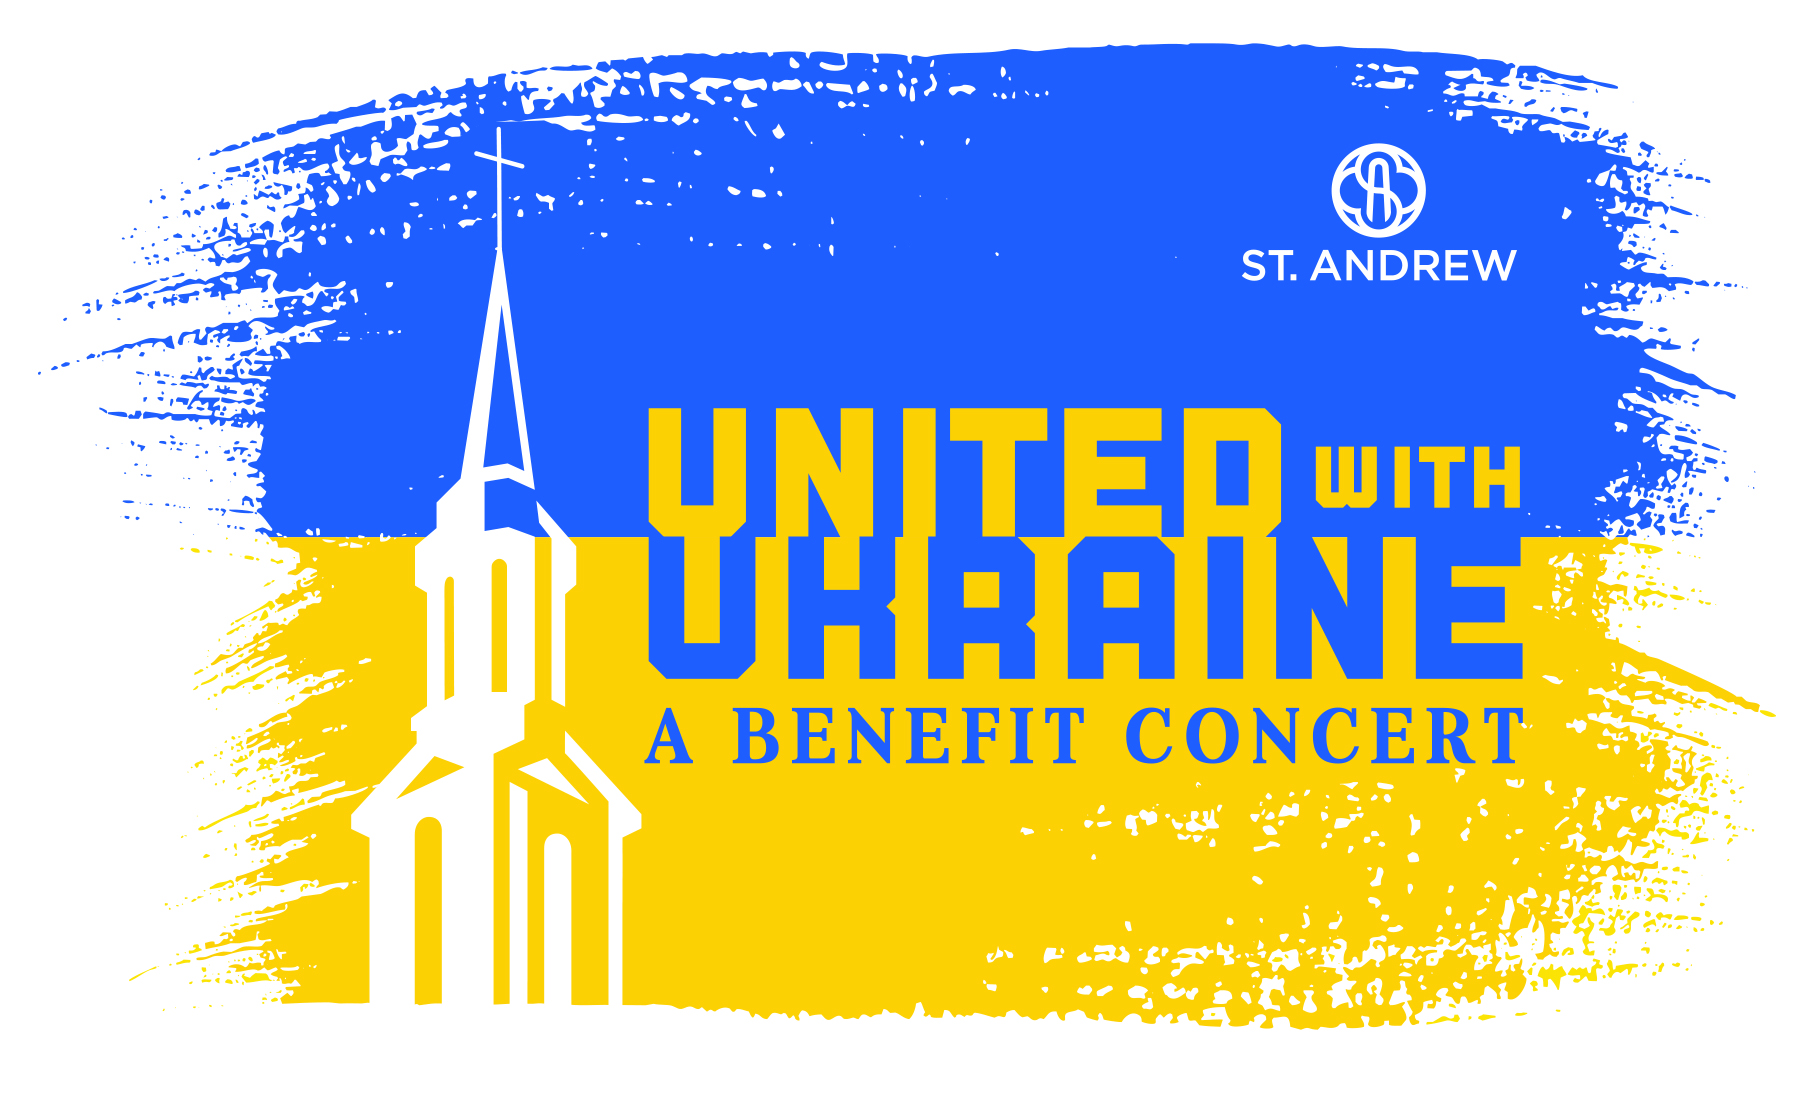 United with Ukraine graphic with St. Andrew logo